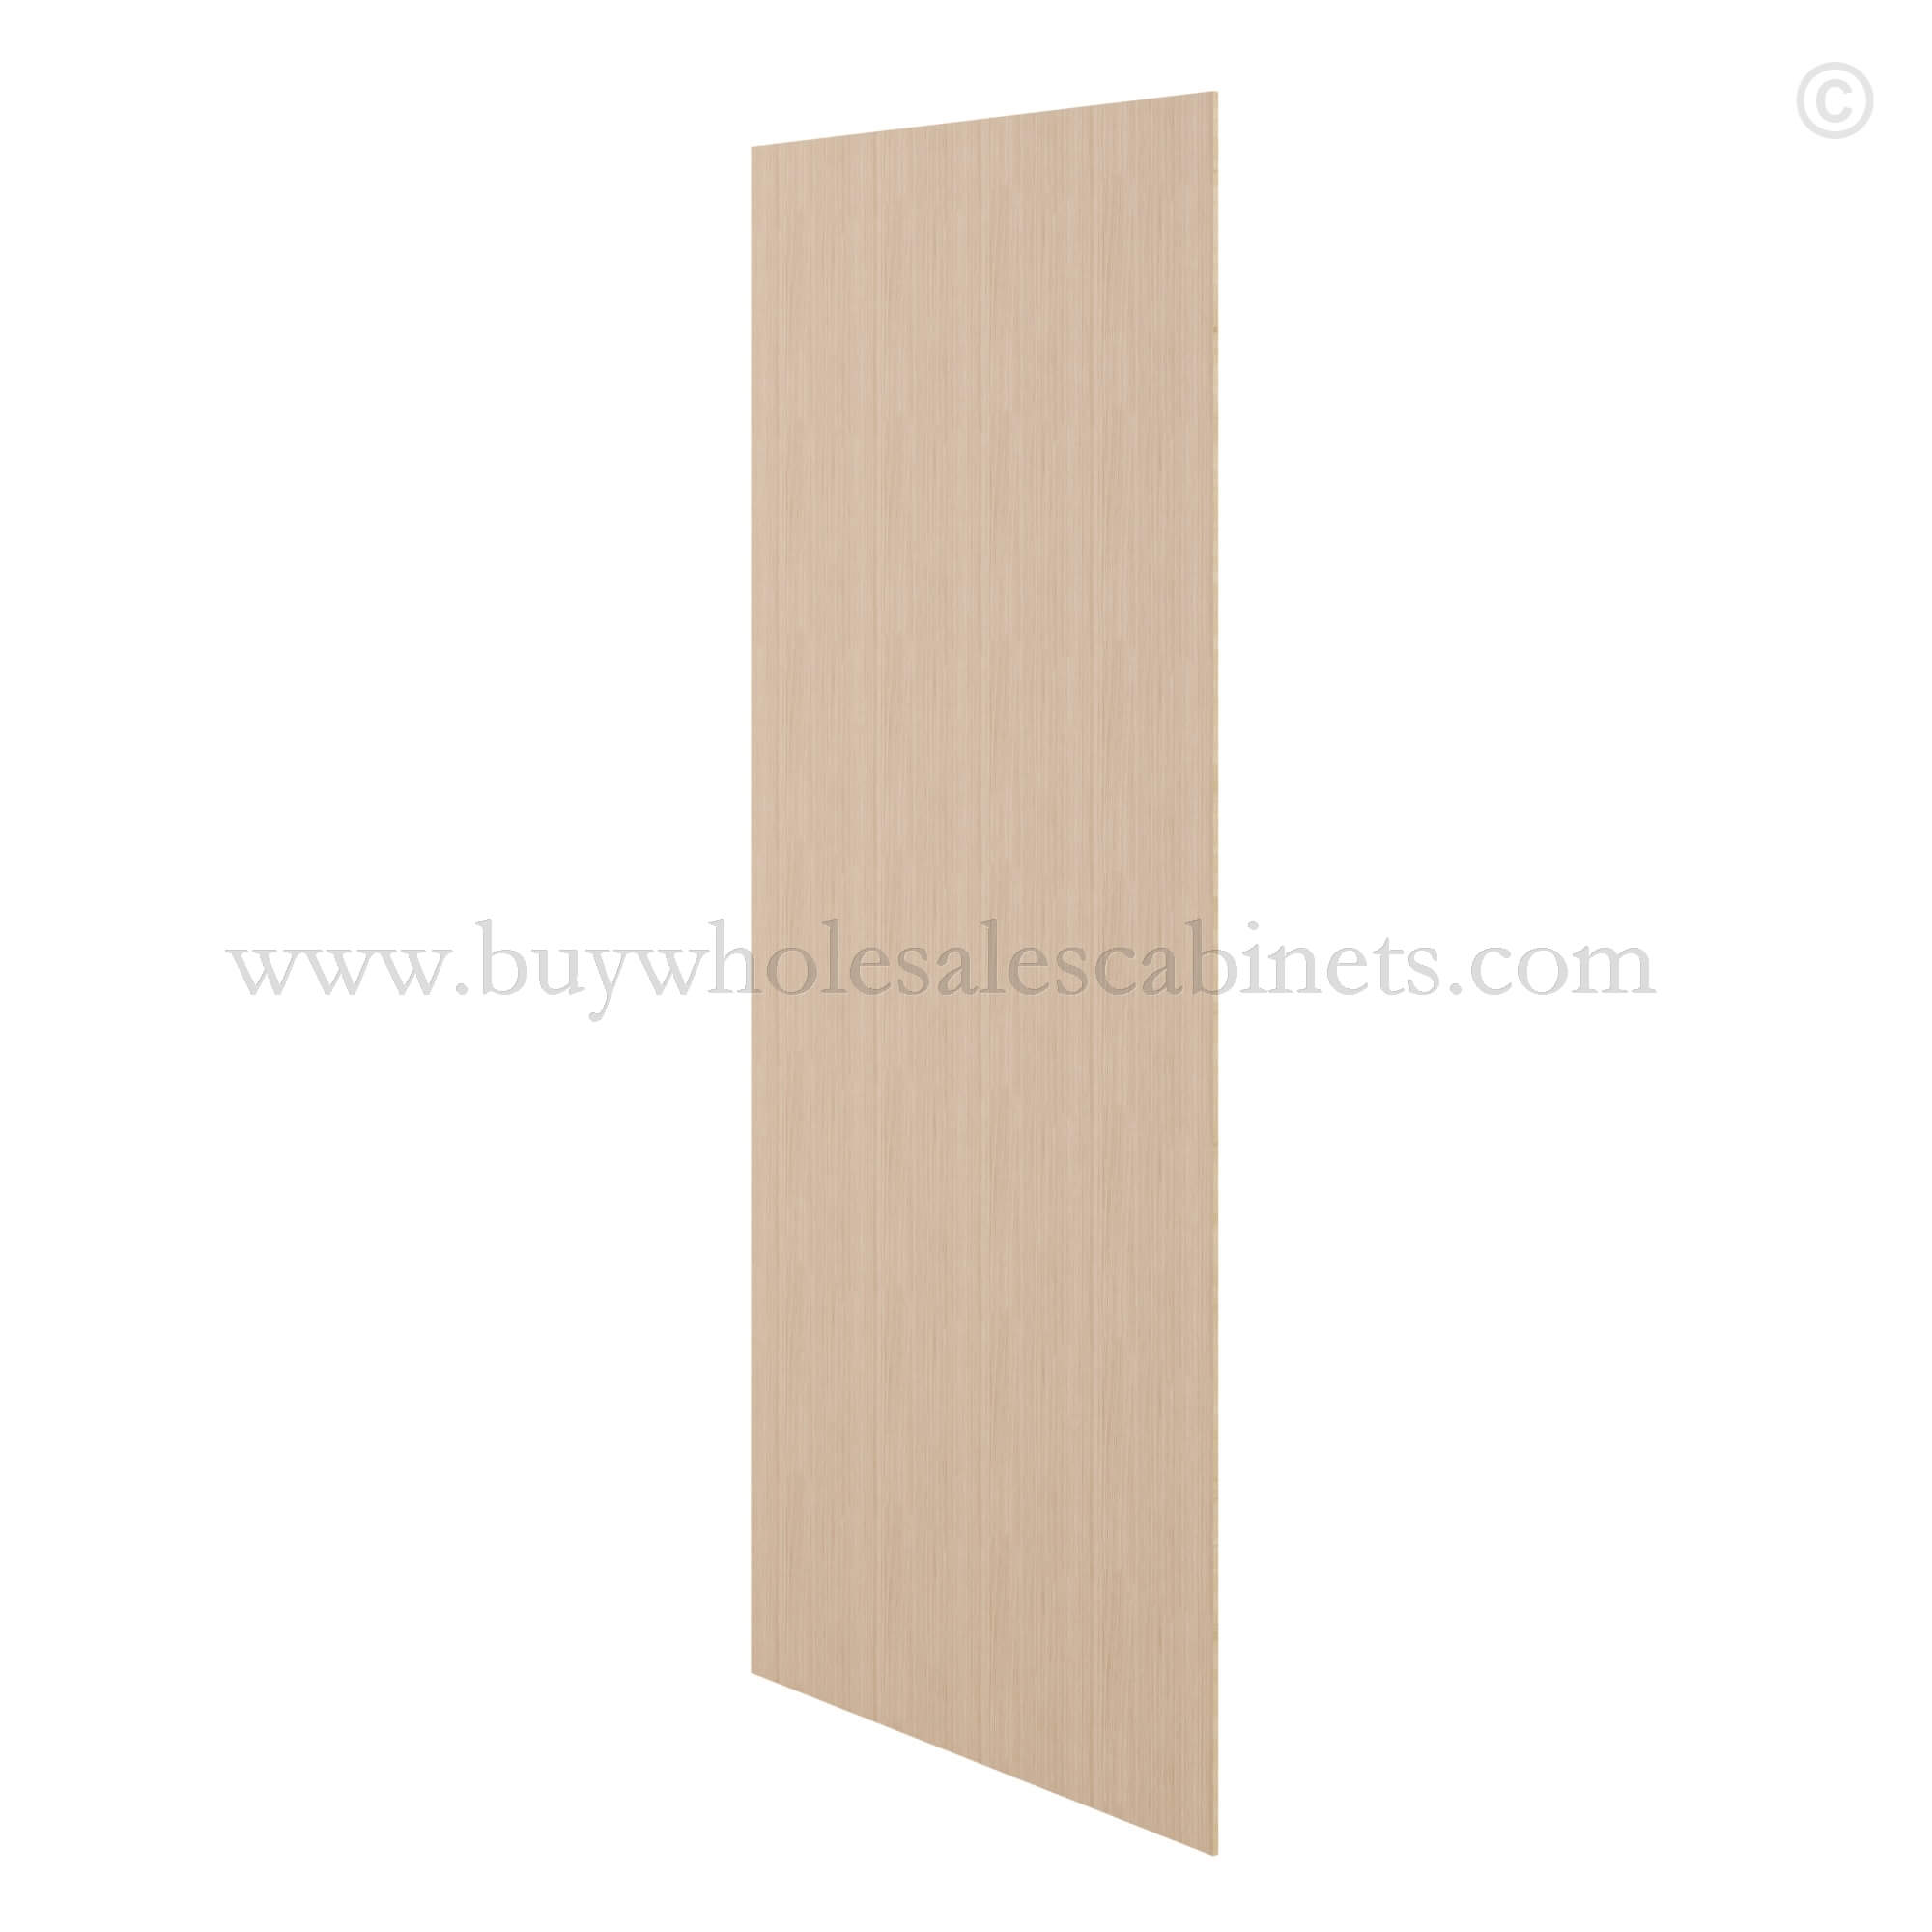 Slim Oak Shaker Tall Skin Veneer Panel, rta cabinets, wholesale cabinets